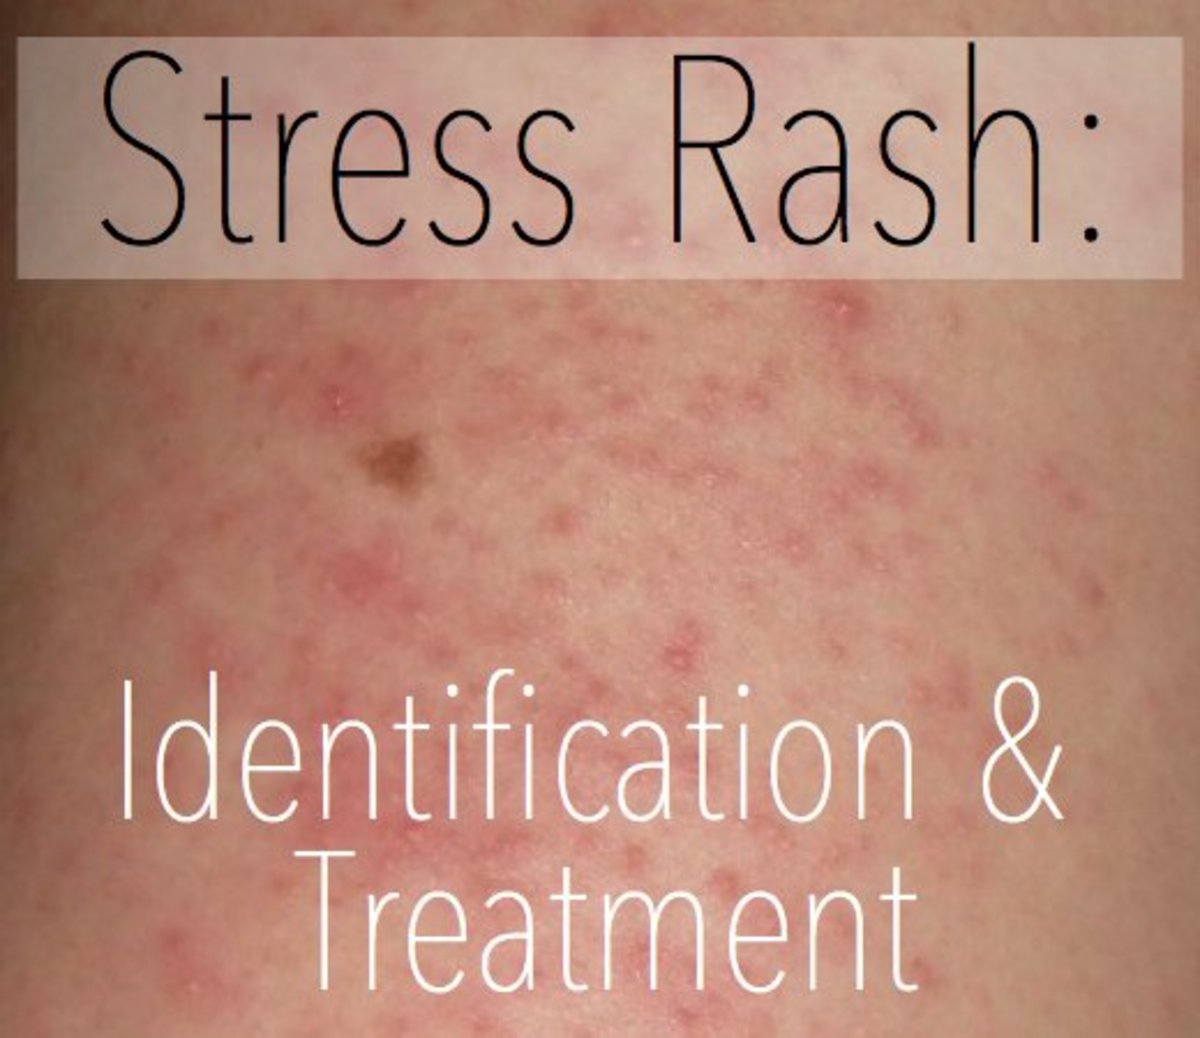 Stress Rash: Causes, Symptoms, Pictures, &  Treatment ...